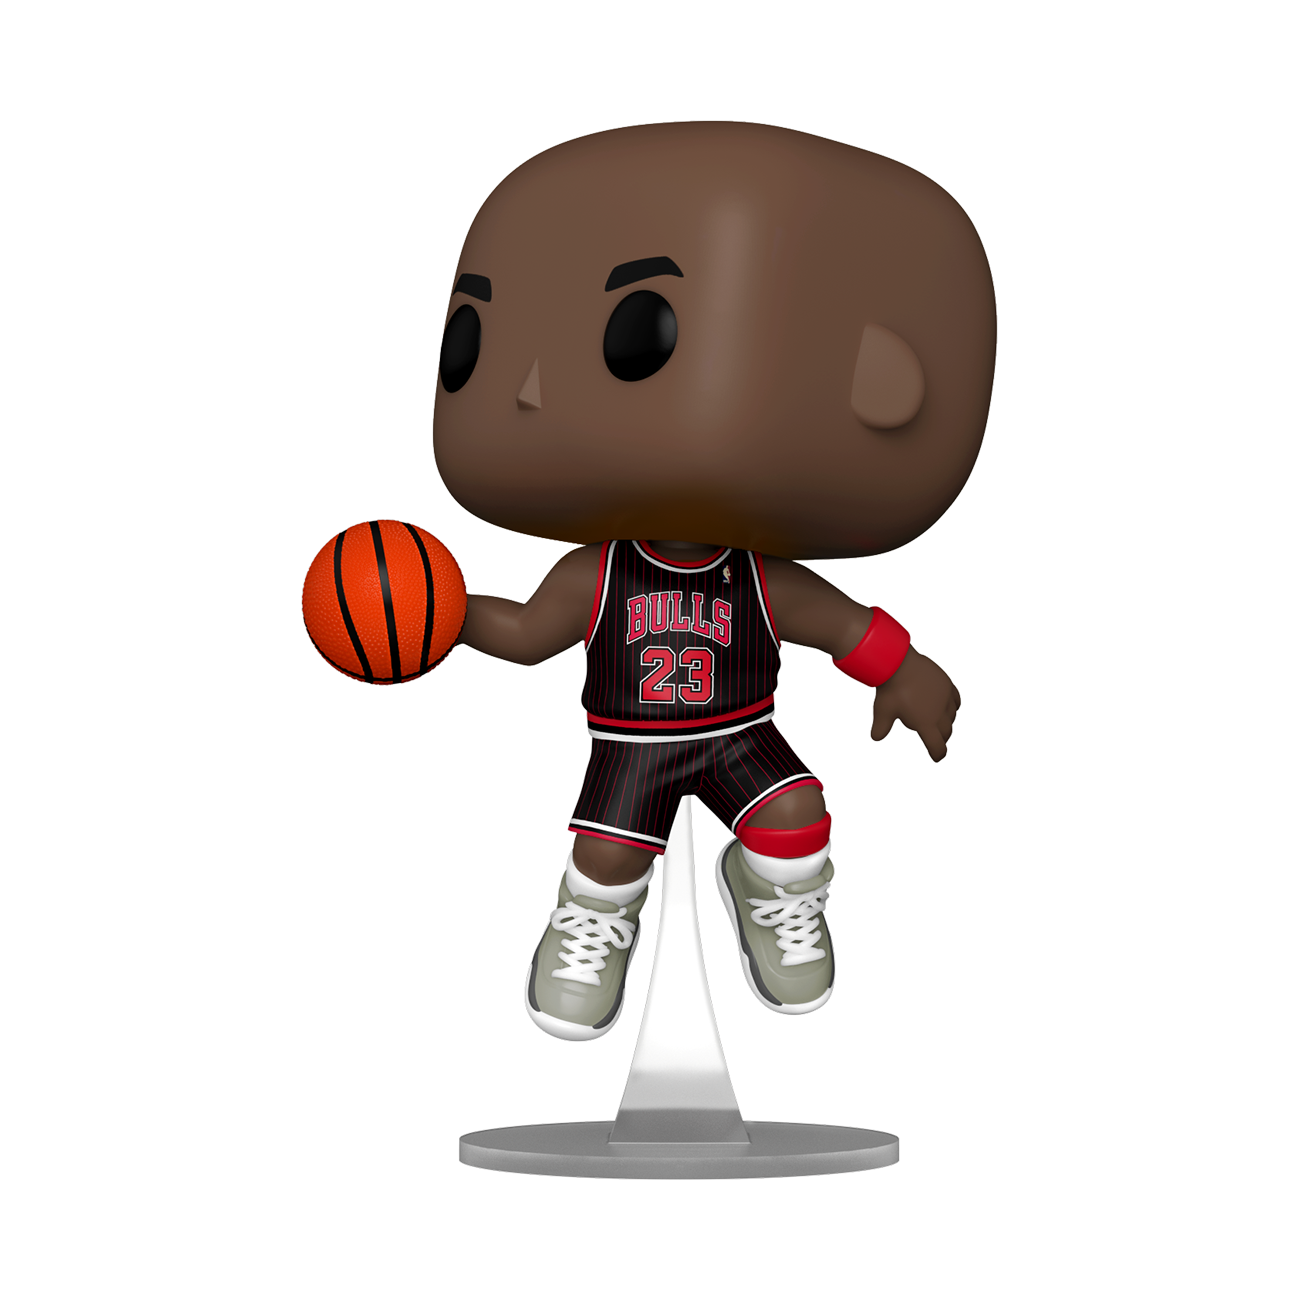 Michael Jordan - Basketball Player Png Image Transparent